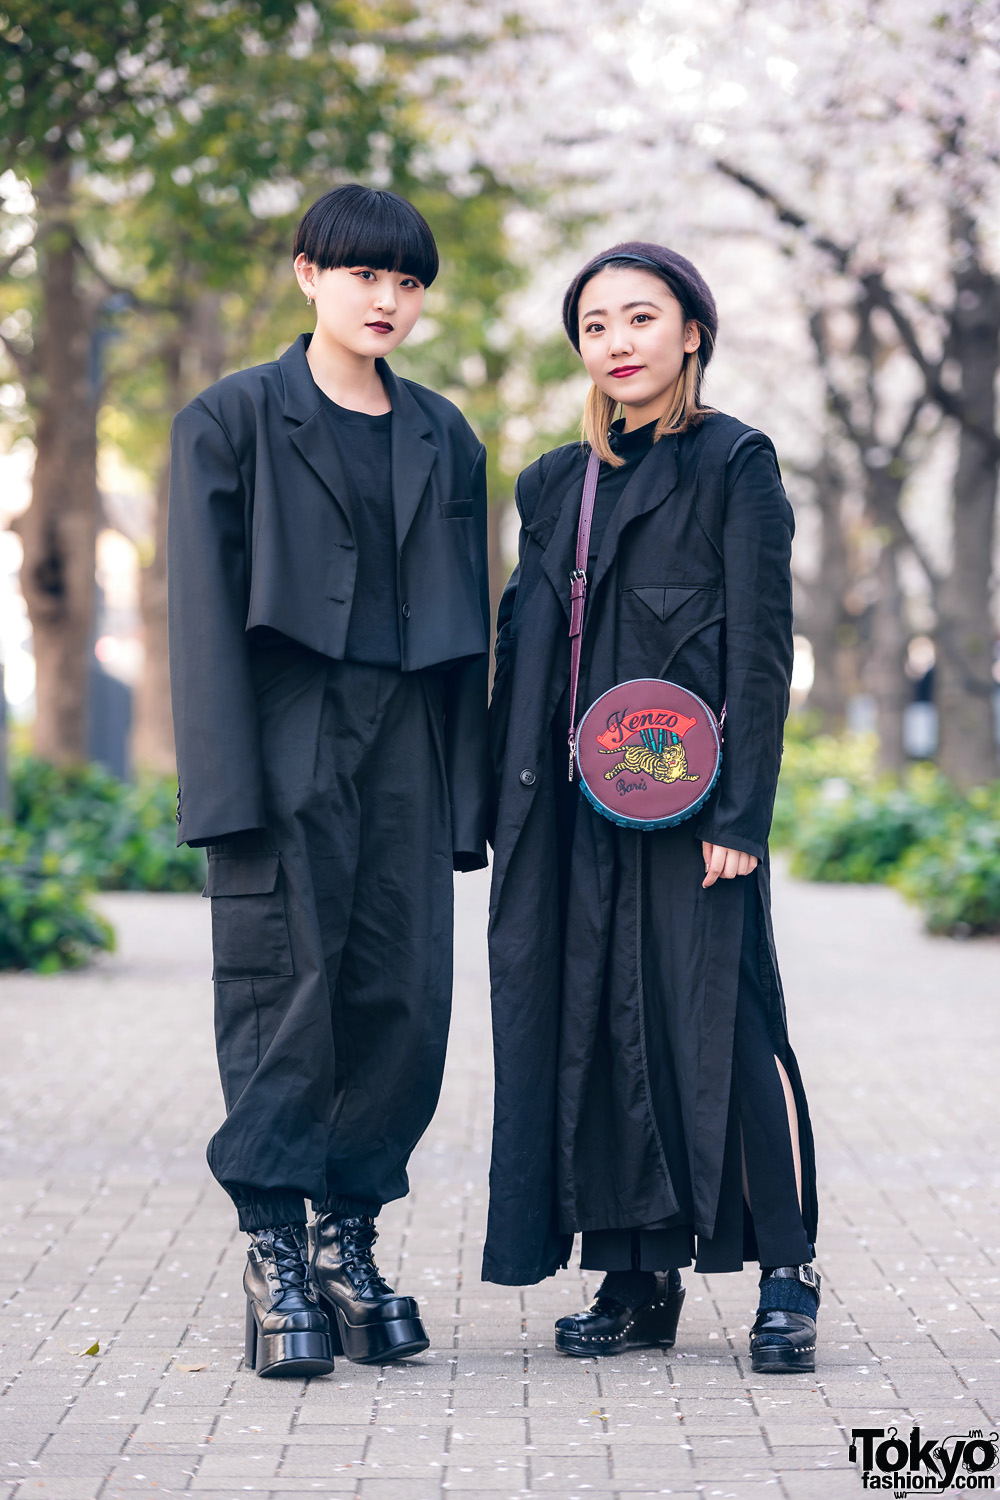 All Black Styles at Bunka Fashion College w/ Limi Feu Long Coat, Style Nanda Cropped Blazer, Sly, This Is Never That, Studious, Kenzo Round Sling & Yosuke Platforms